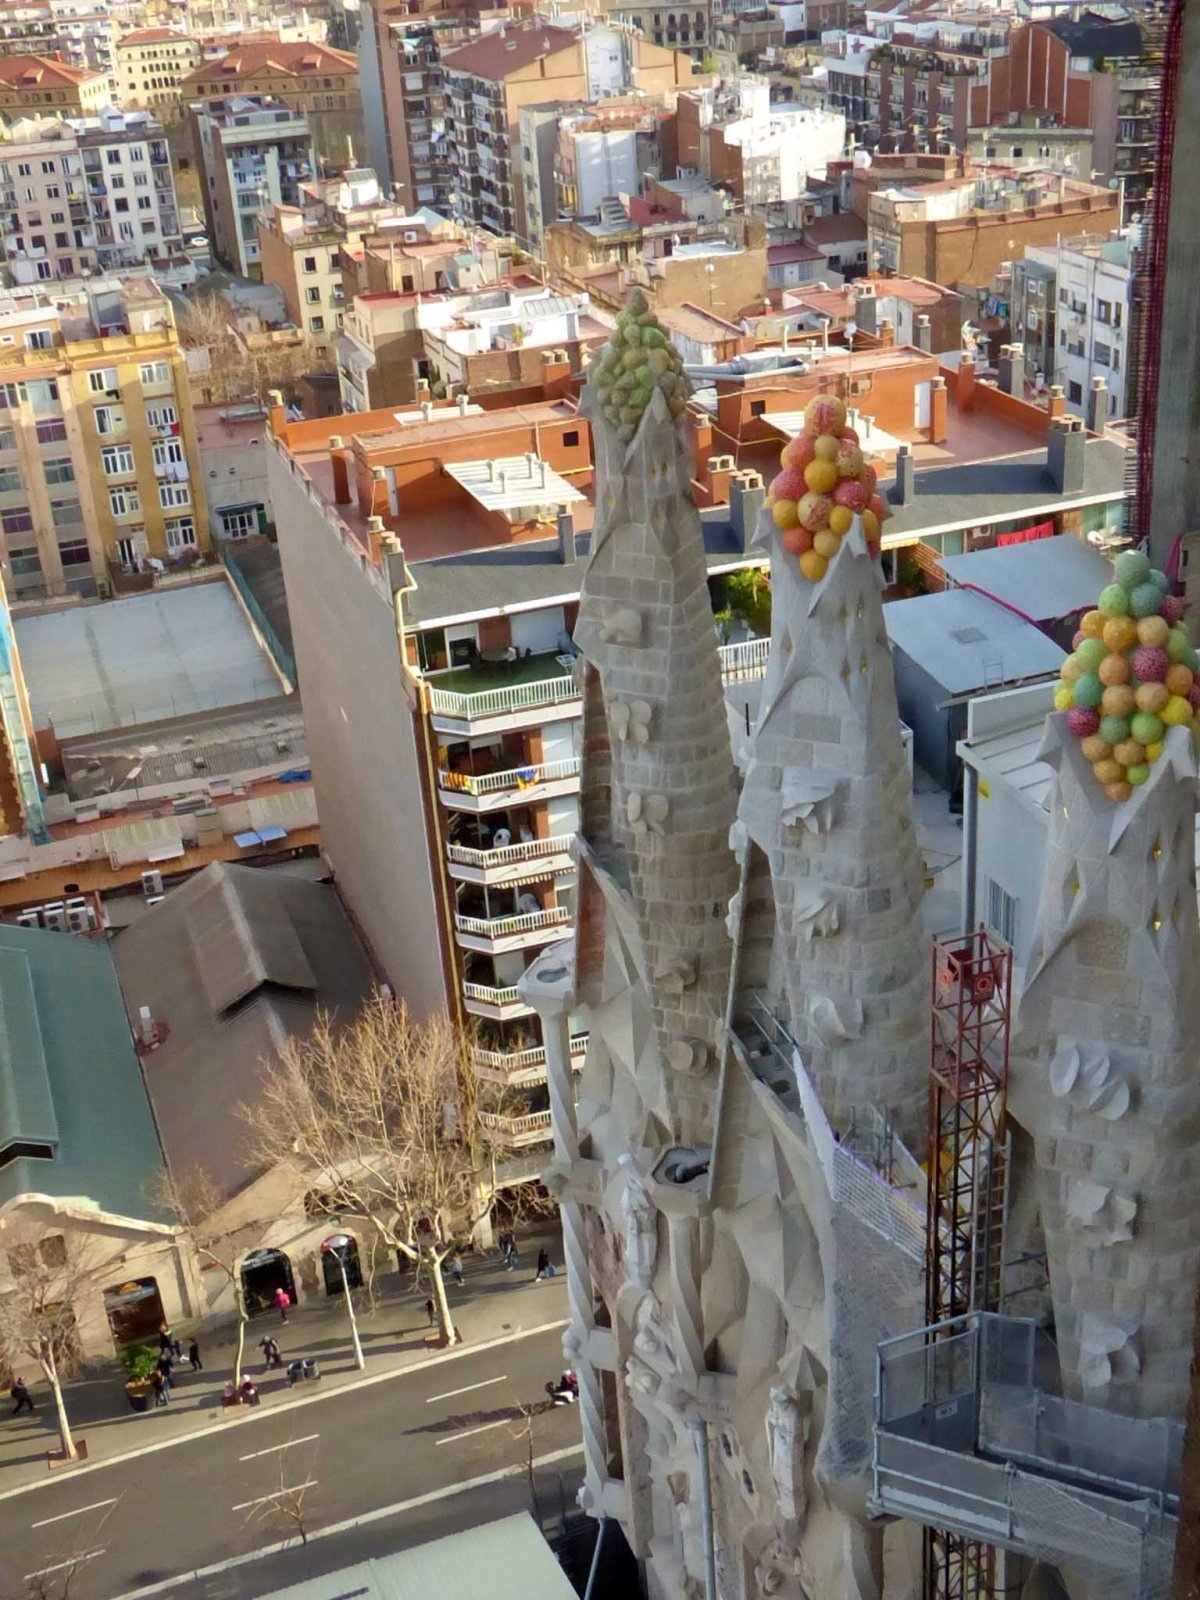 Sagrada familia - Tower on the Nativity facade